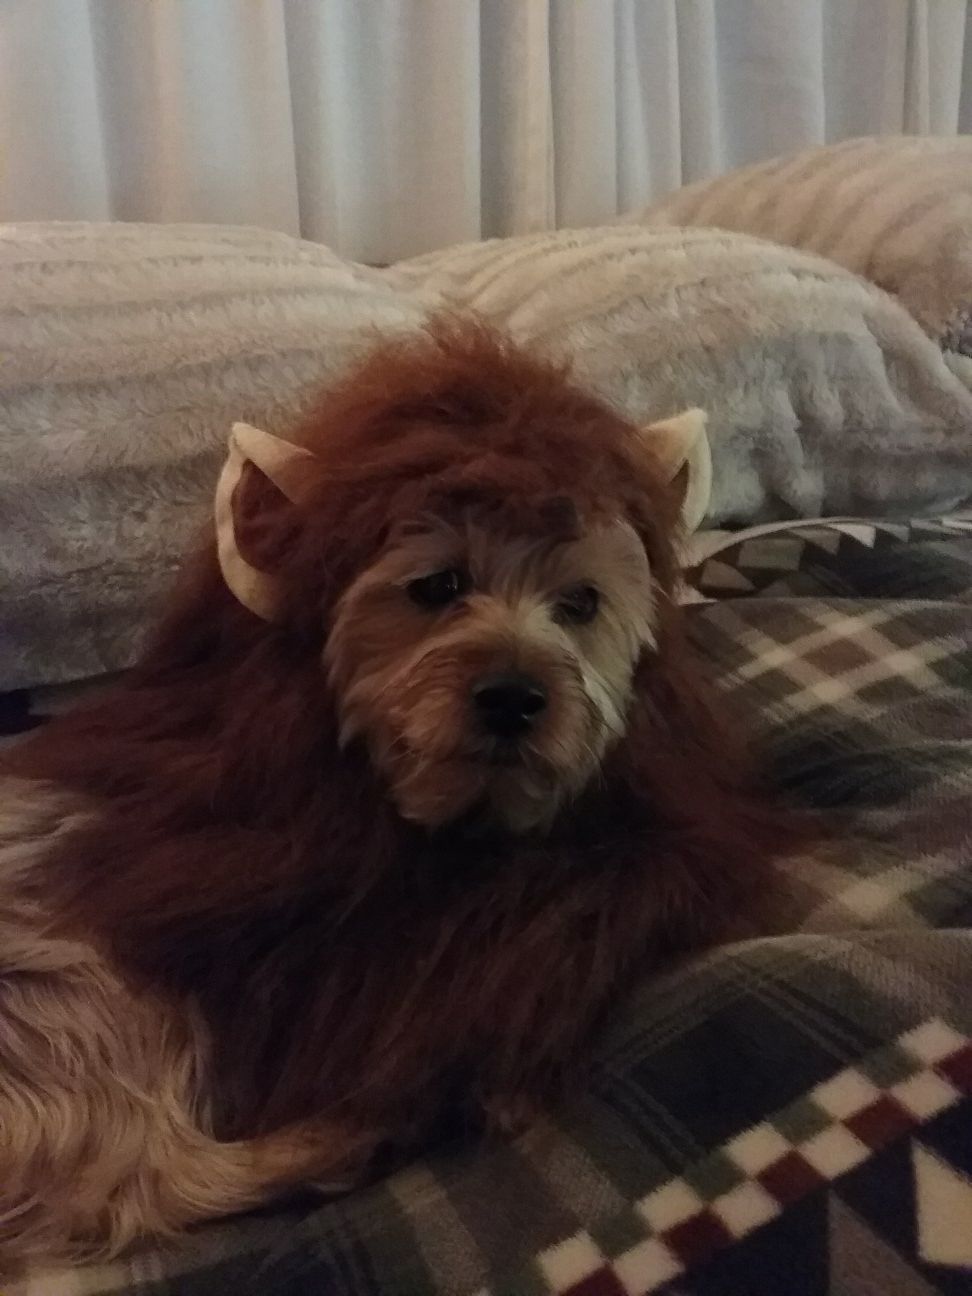 Dog Halloween costume, animal costume, lion's mane, for a dog